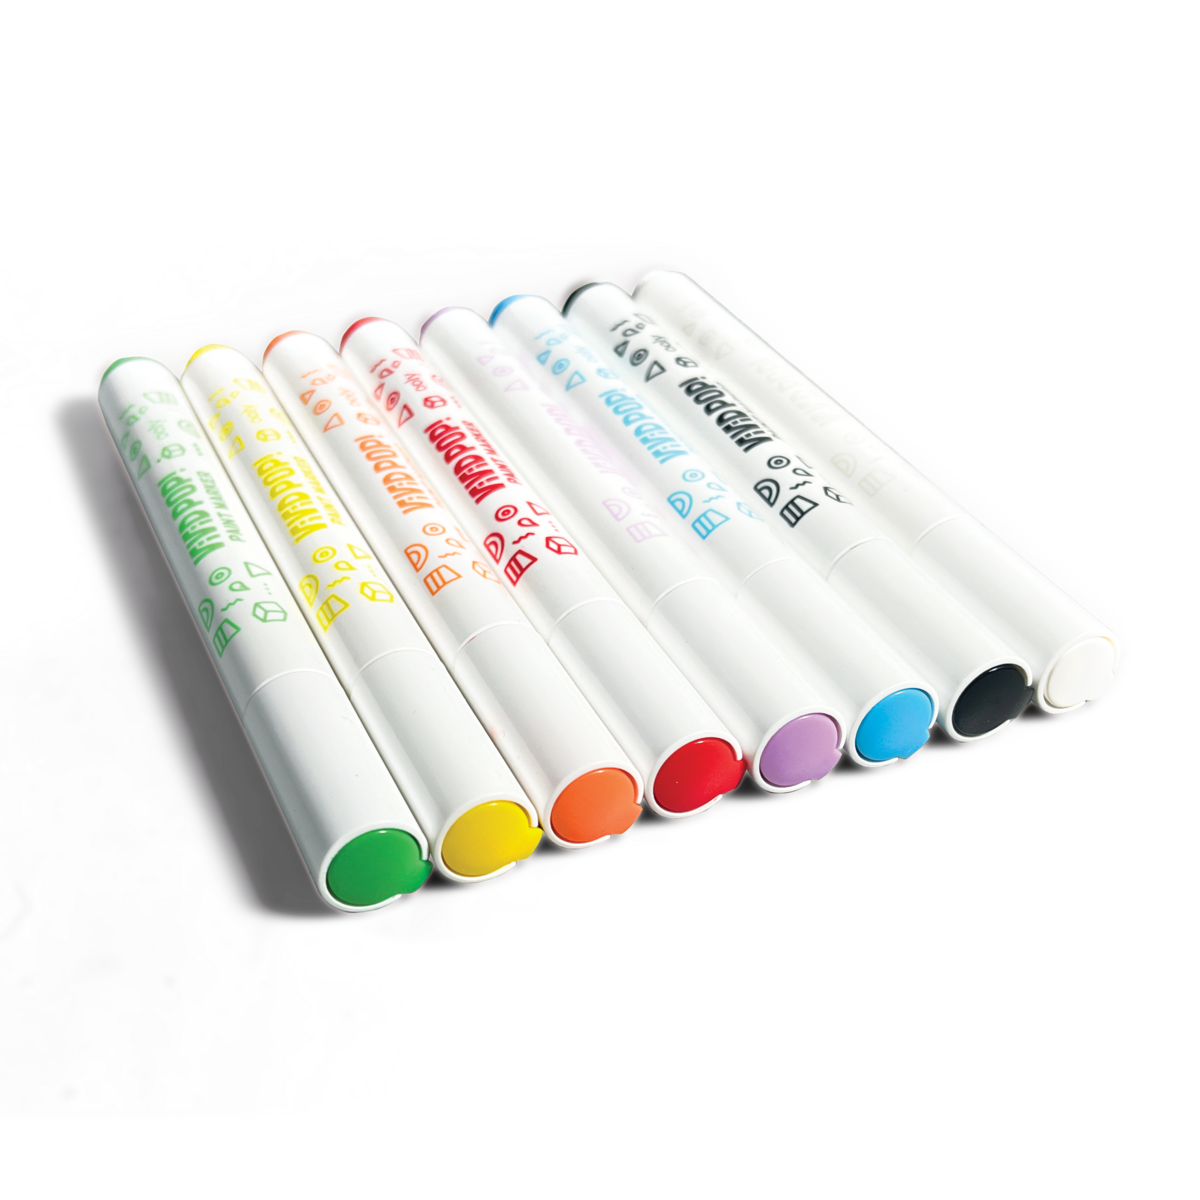  Vitoler Paint Marker Pens - 8 Colors Oil Based